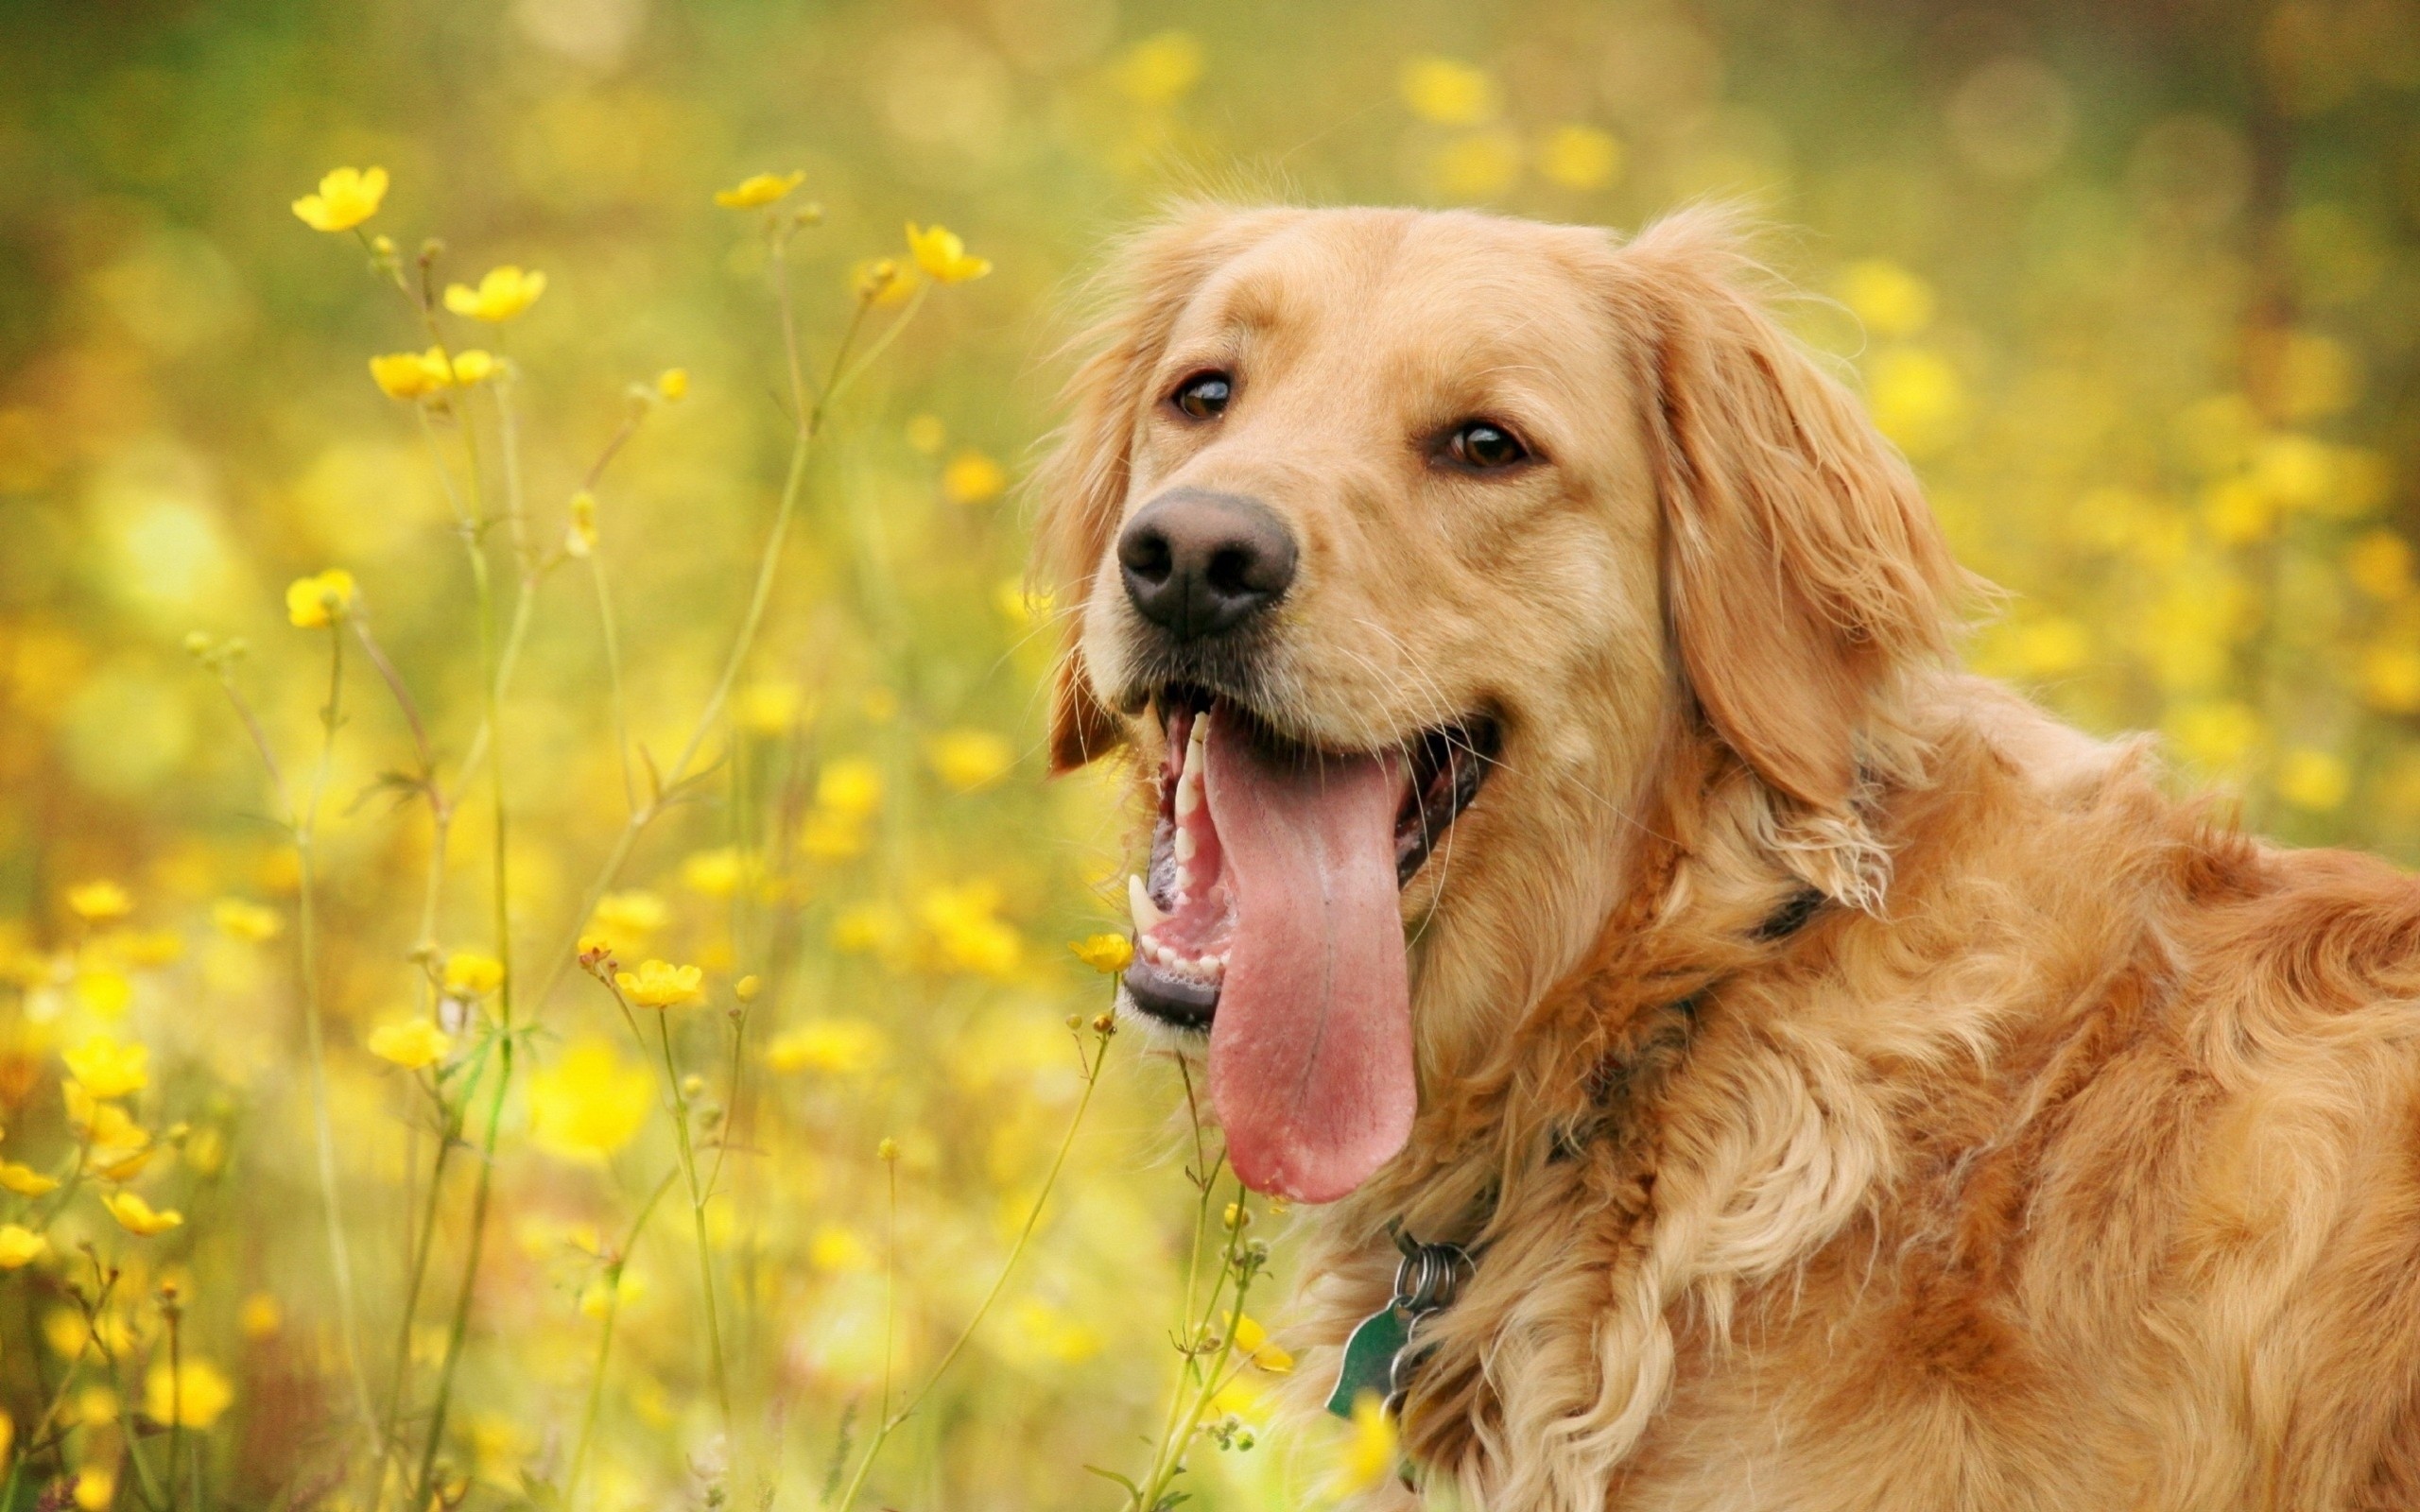 General 2560x1600 animals tongues yellow flowers dog golden retrievers mammals outdoors closeup